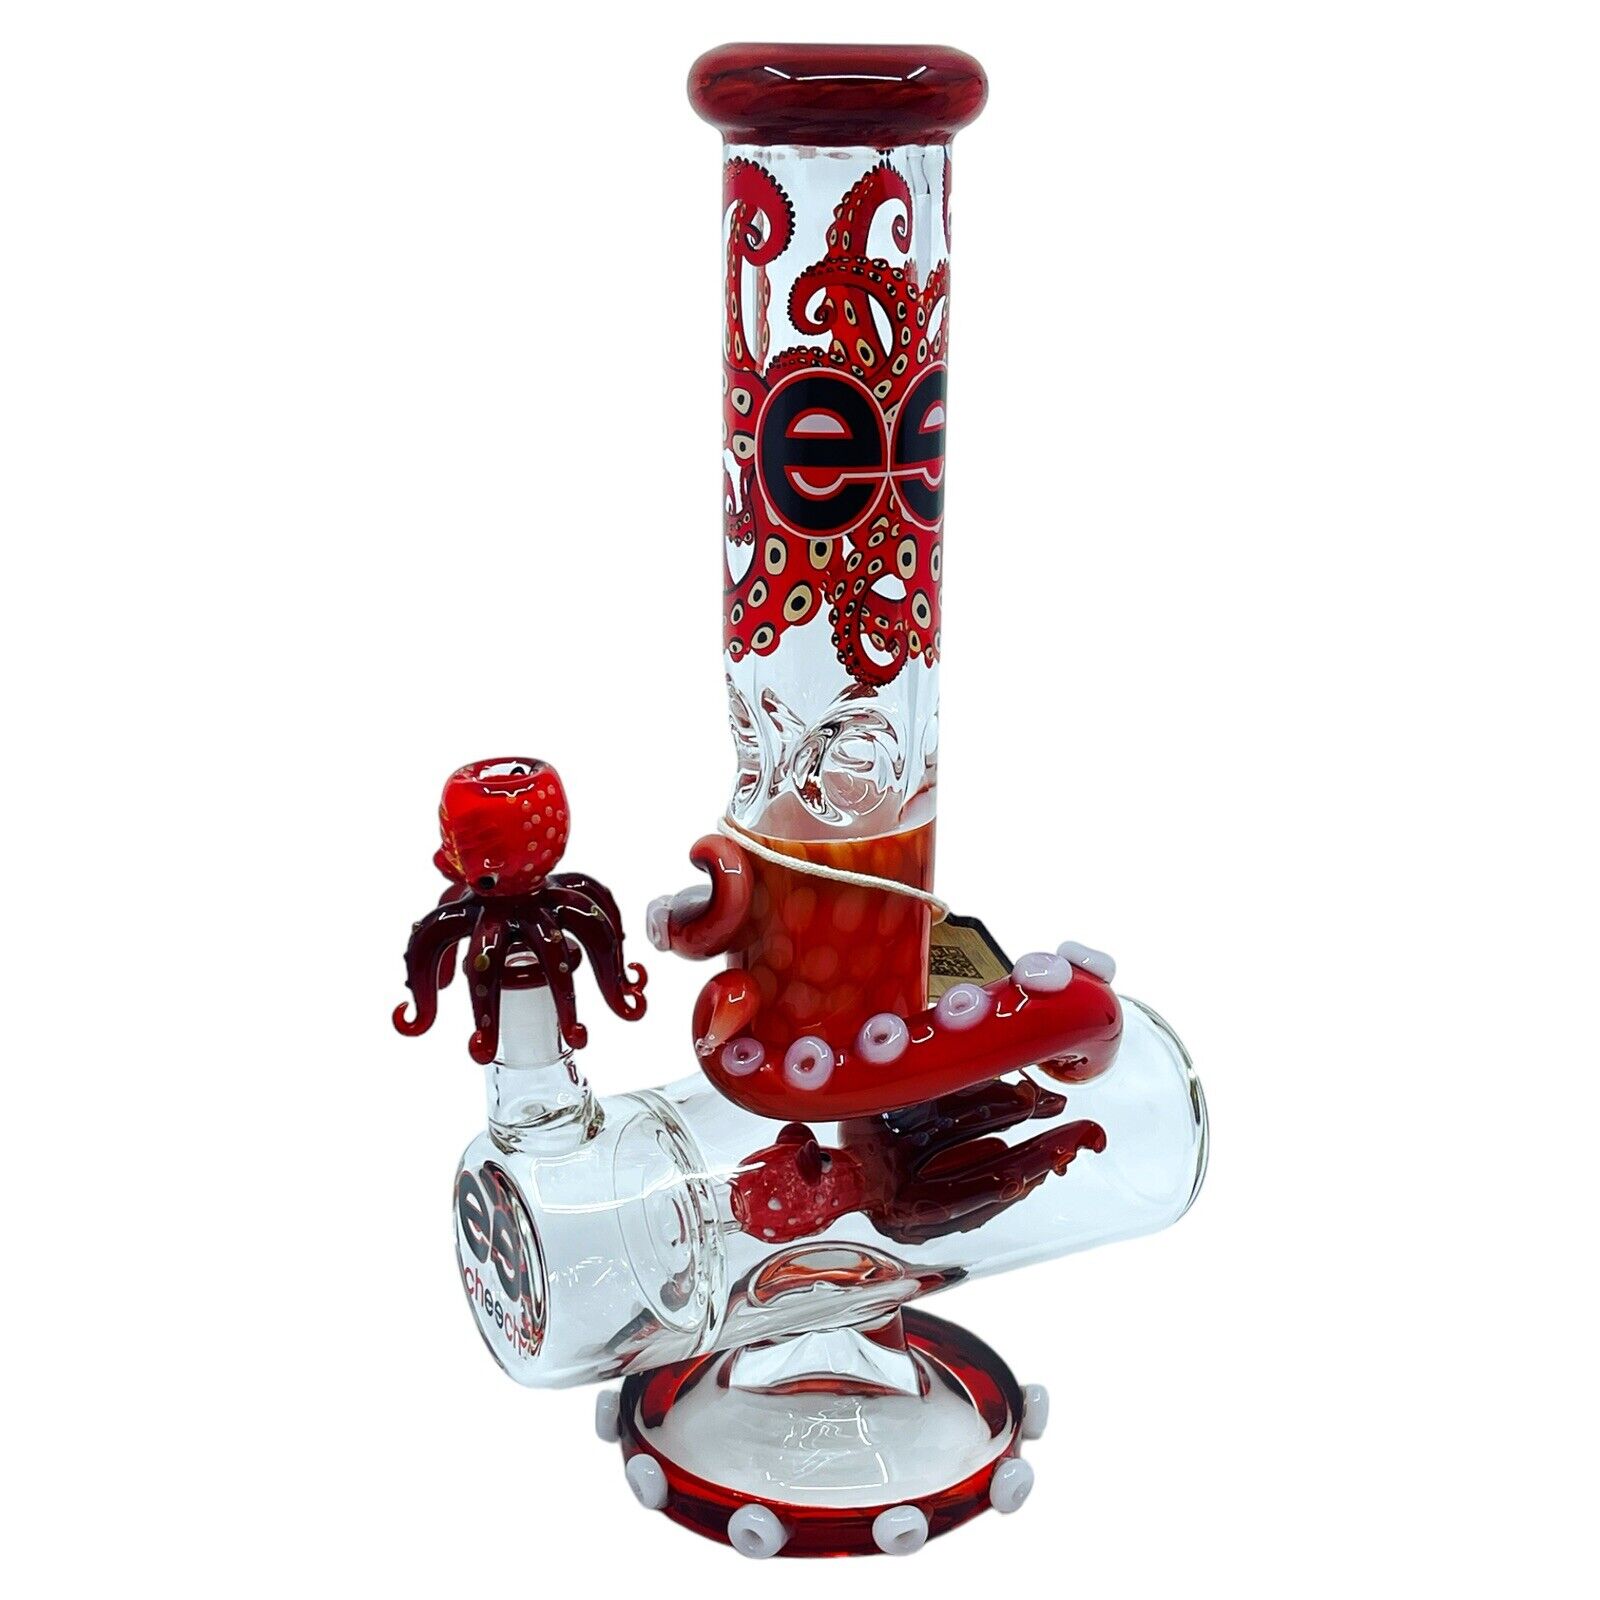 Cheech Bong Octopus Design Bowl Glass Waterpipe 10inch Tall heavy Duty Red